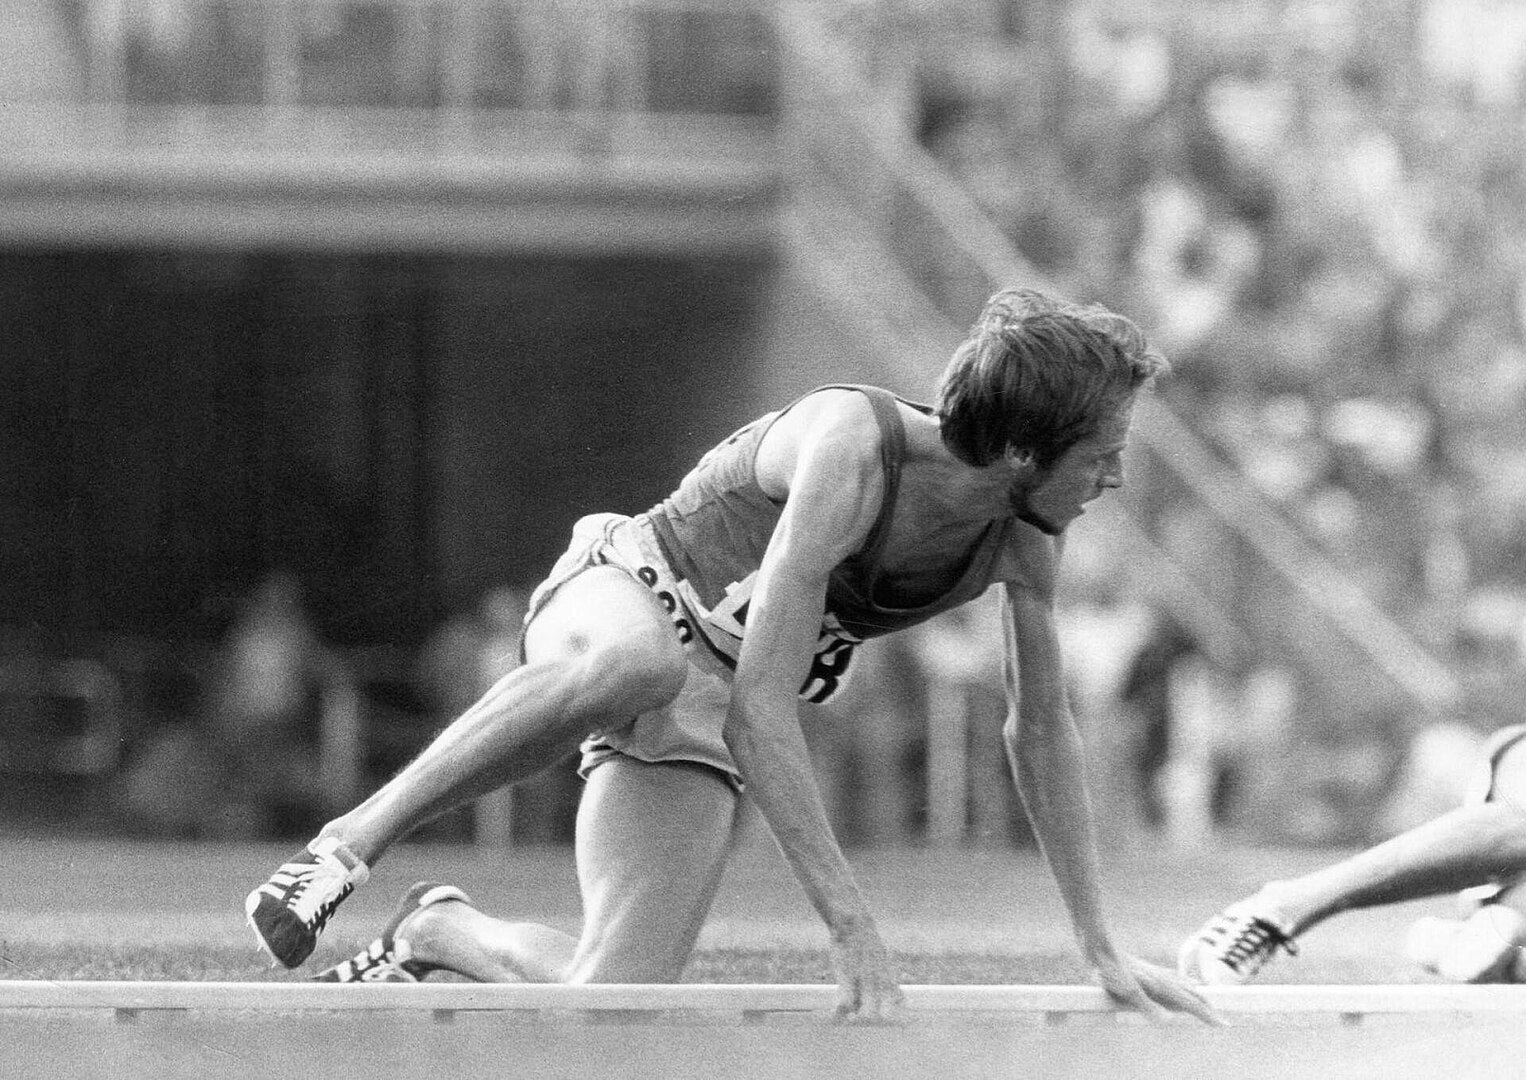 1970s Sporting Comebacks - Lasse Viren - Athletics (1972 Olympics)